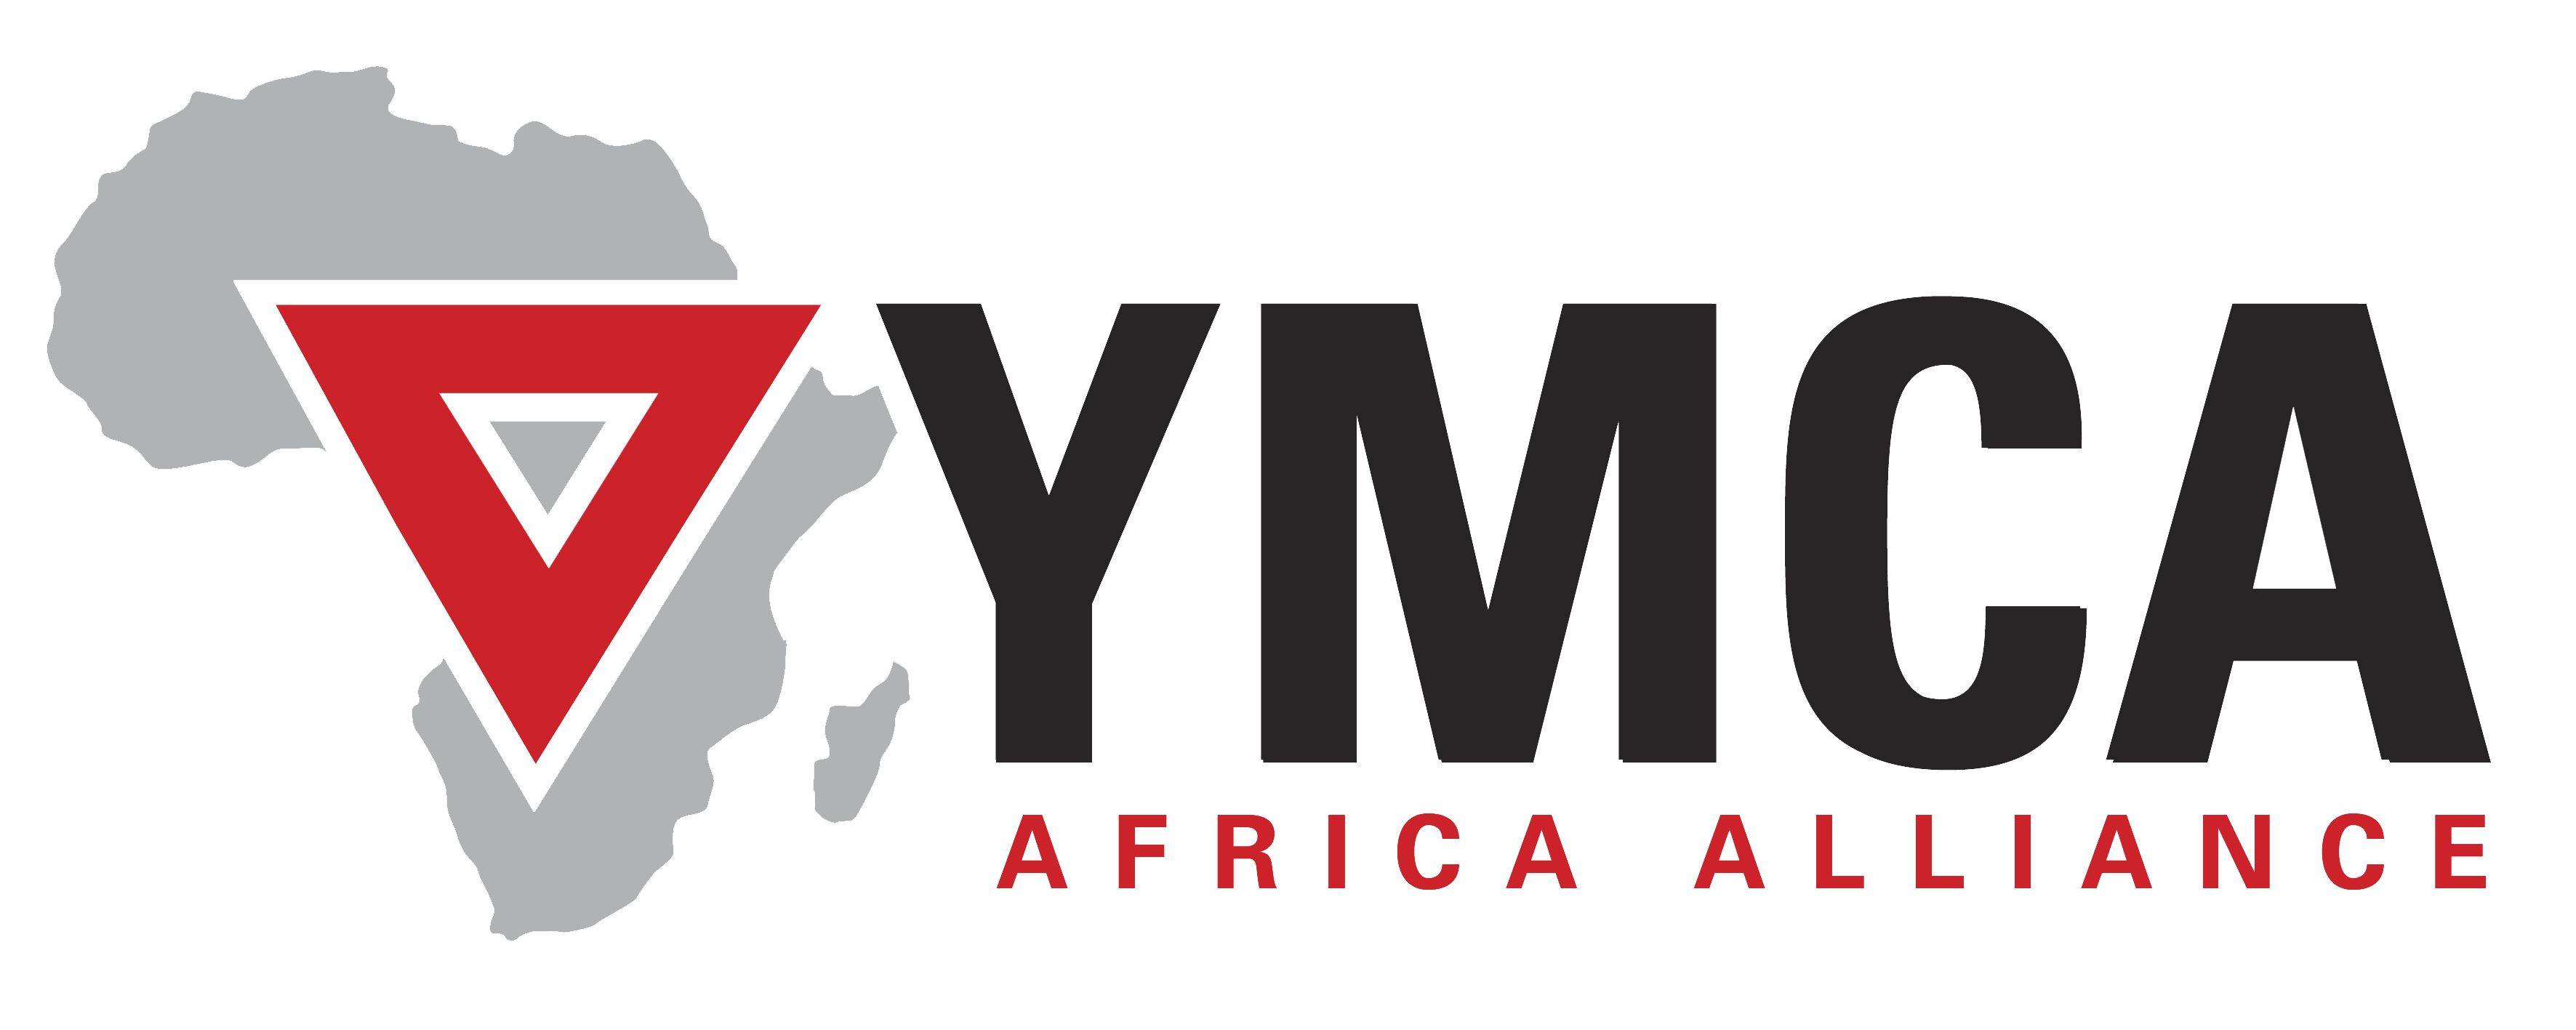 AFRICA YMCA logo NO BG